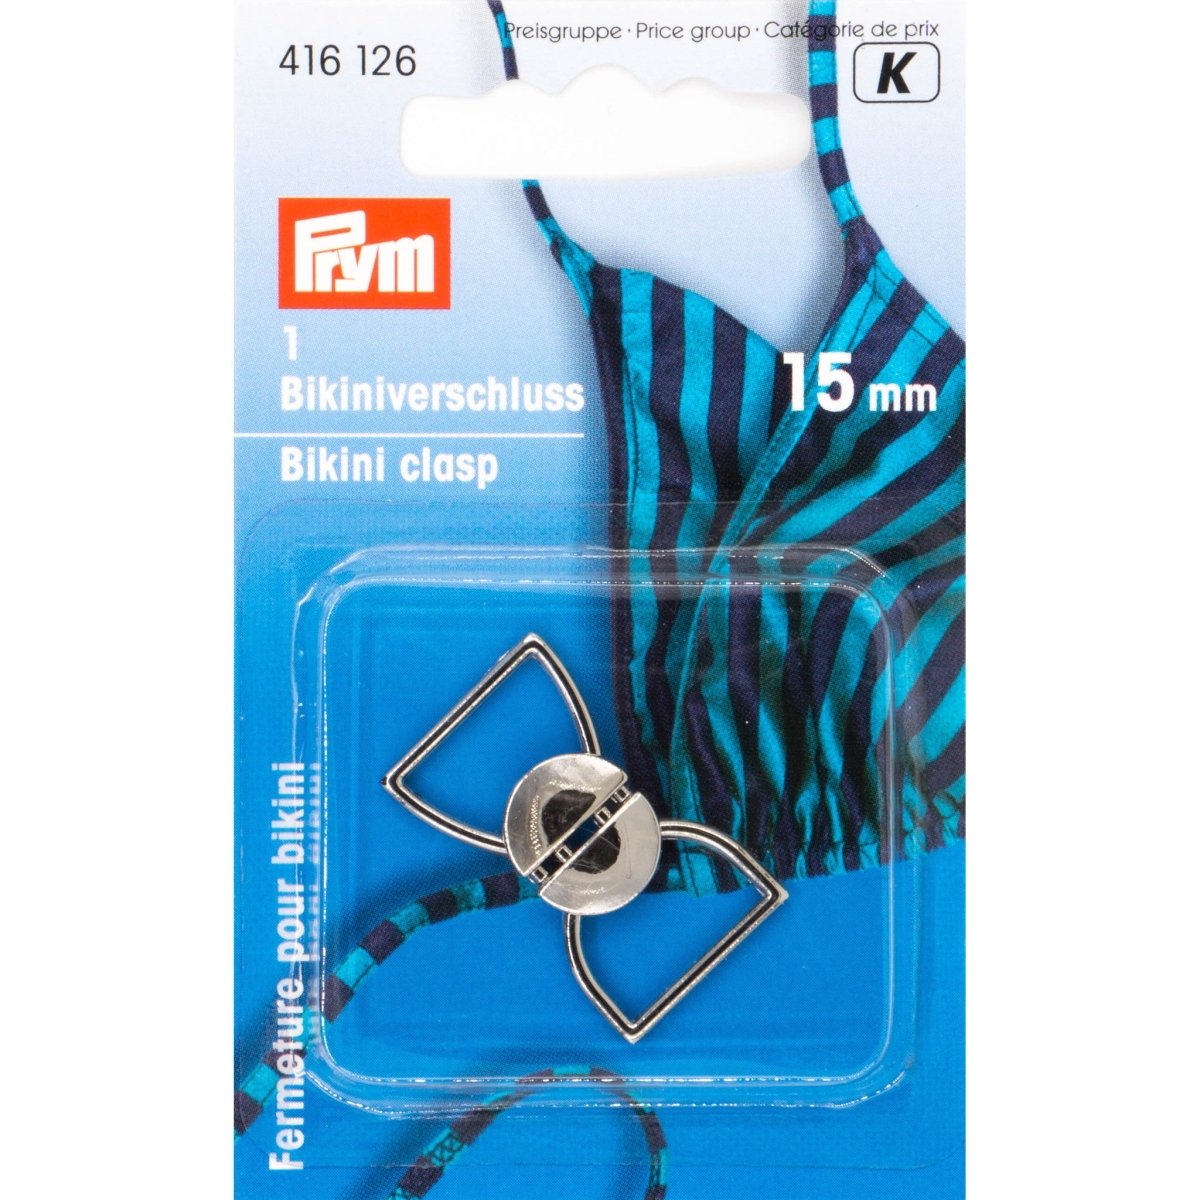 Bikinisluiting metaal 15mm Prym 416126 PRM416126 4002274161261 - Fourniturenkraam.nl